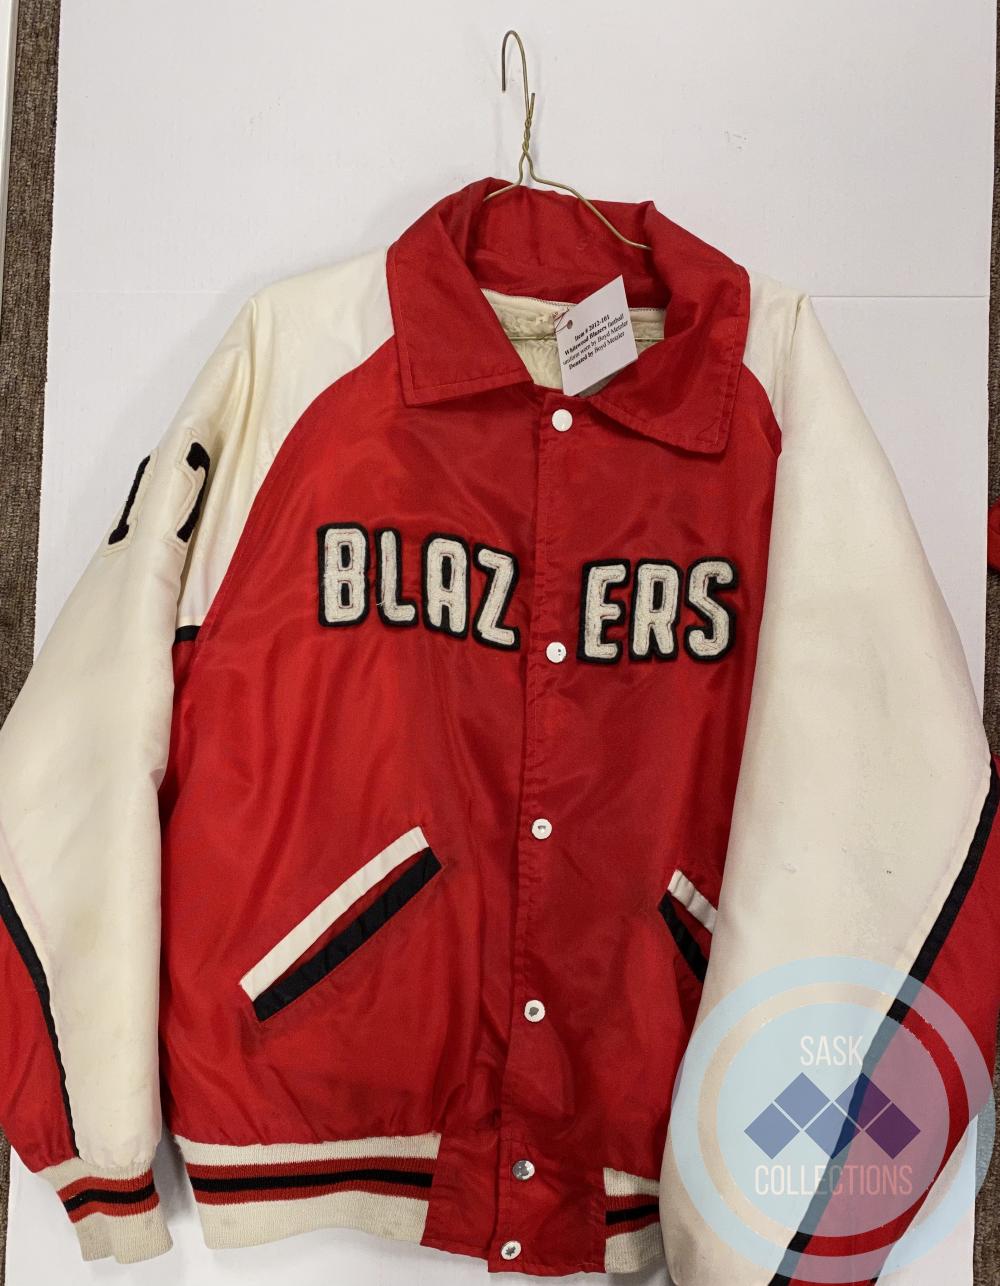 Fastball uniform: <i>Whitewood Blazers, worn by Boyd Metzler</i>